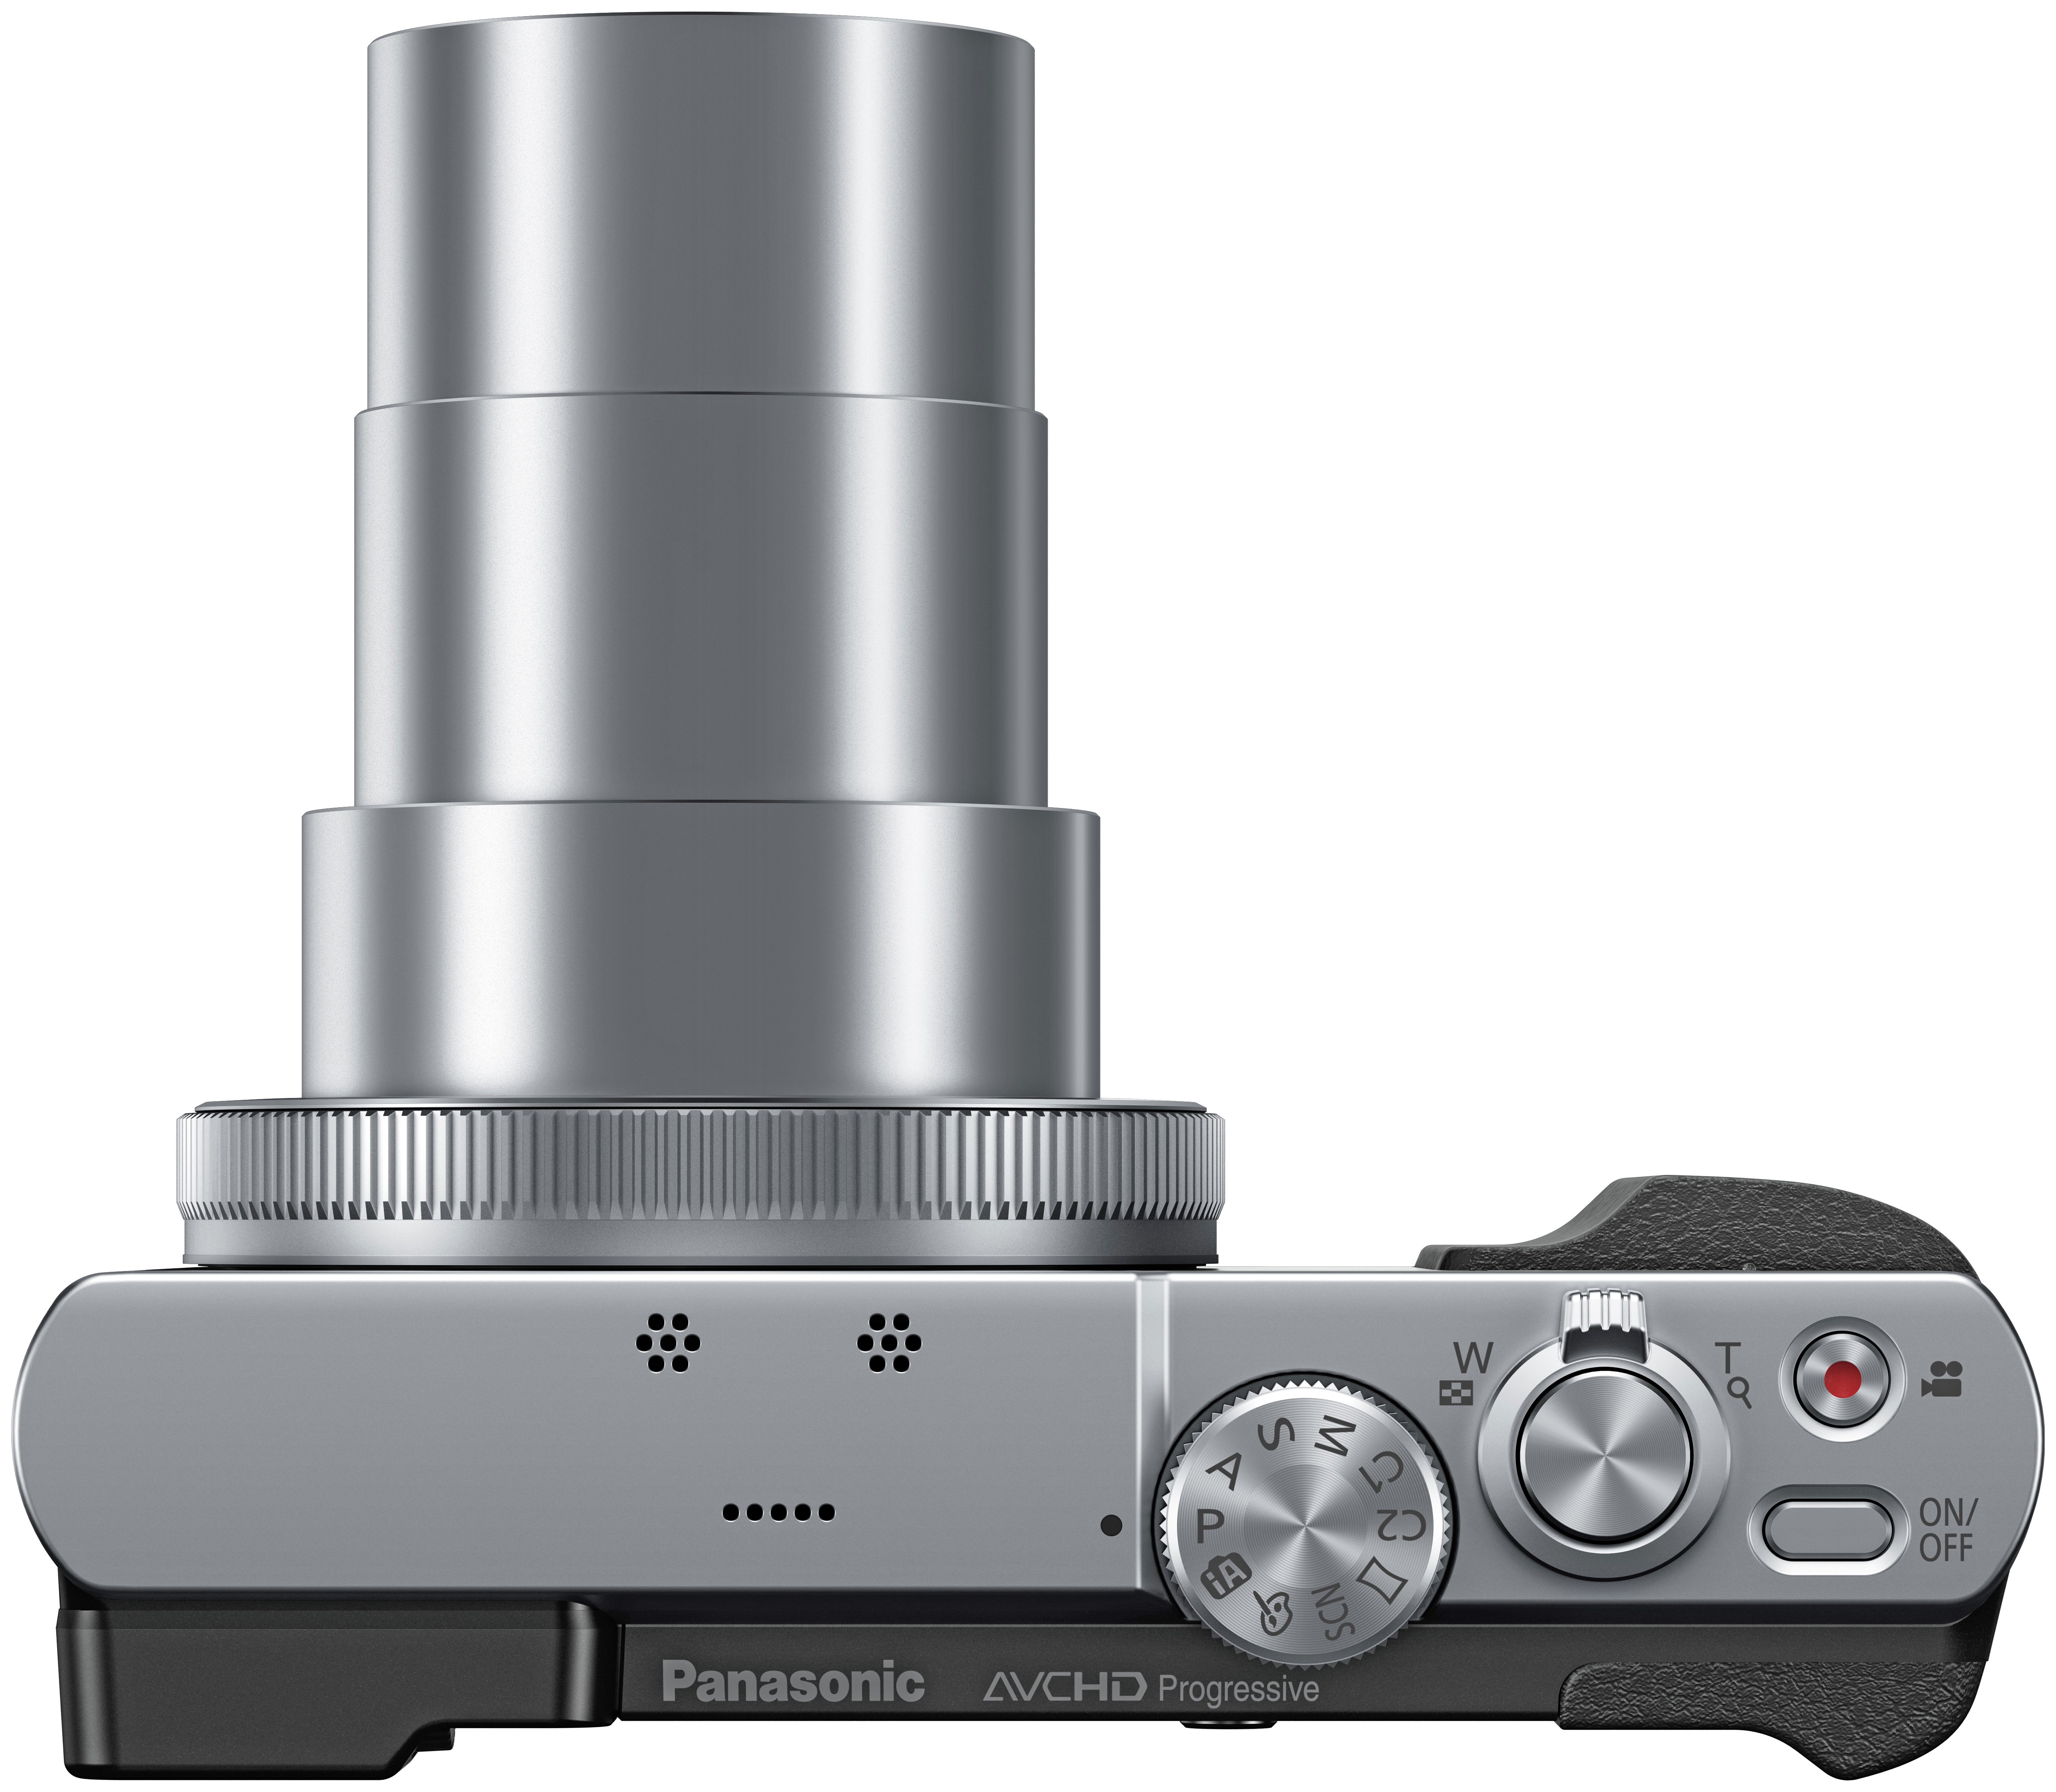 Panasonic TZ70 12MP 30X Zoom Compact Digital Camera Review